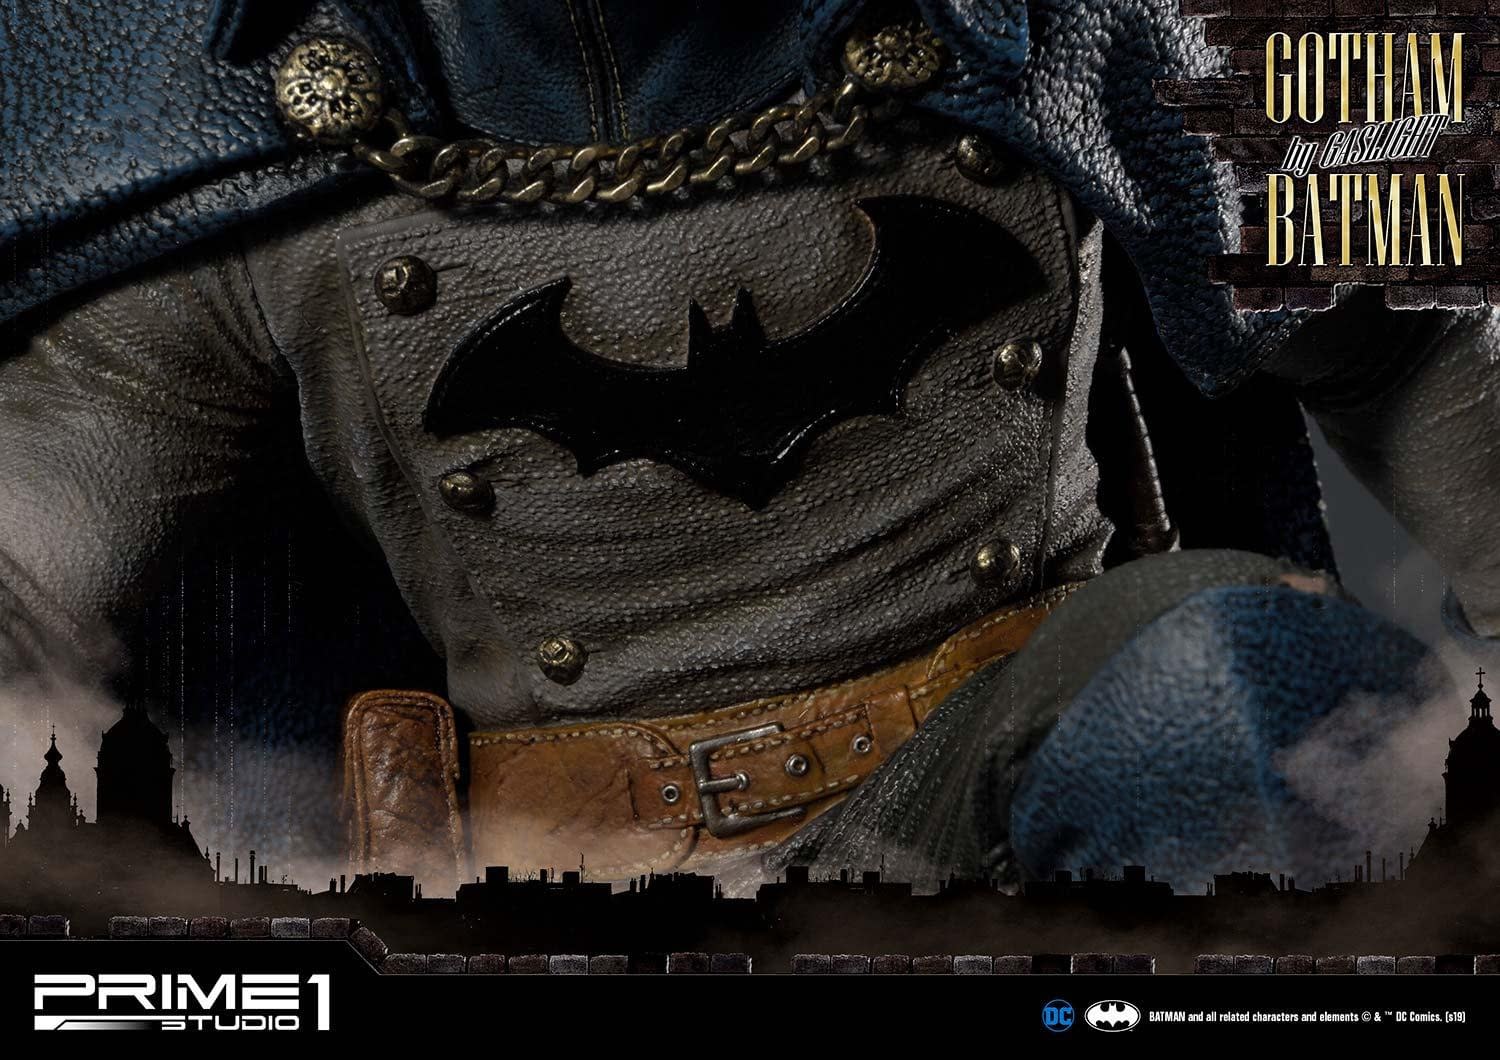 Batman: Gotham By Gaslight Gets a Prime 1 Studios Statue